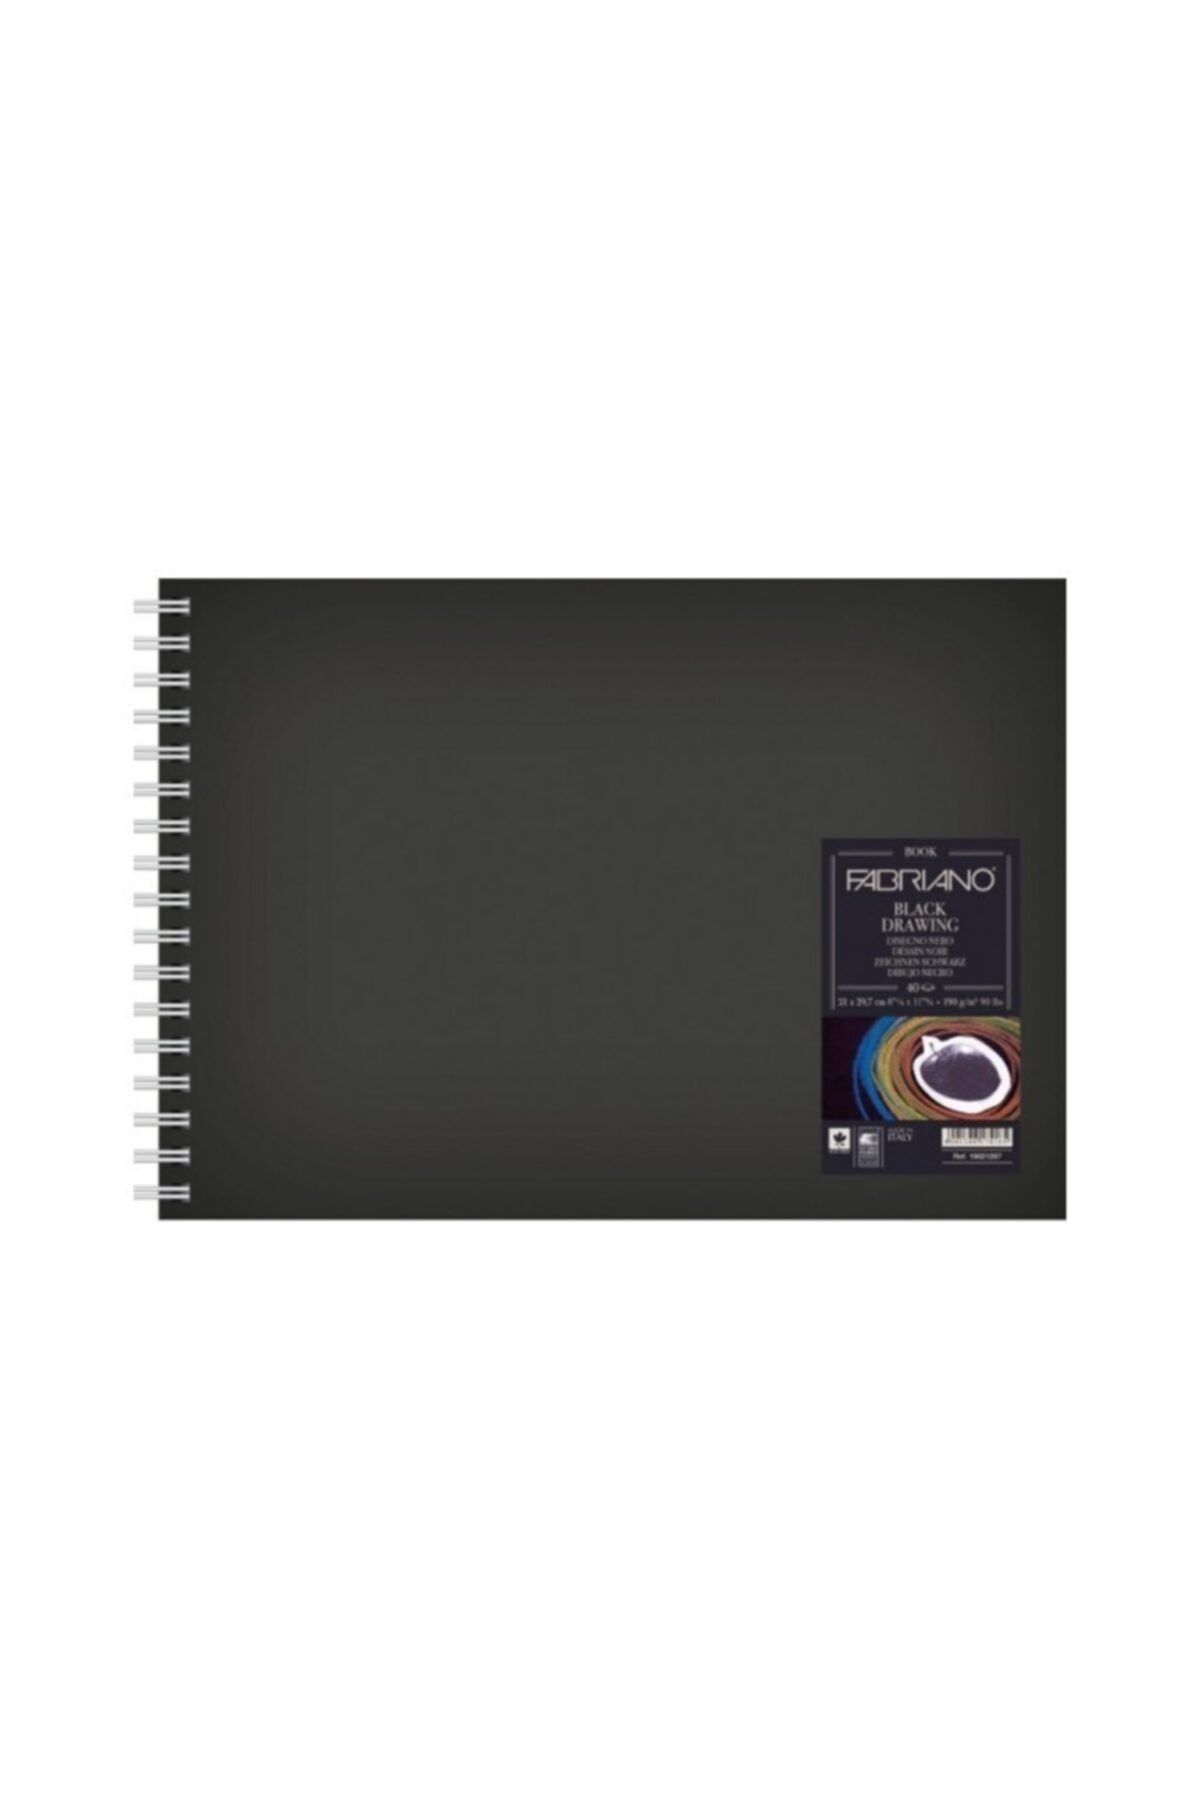 Fabriano Black Drawing Book, Siyah Murillo Karton, 190gr, 21x29,7cm